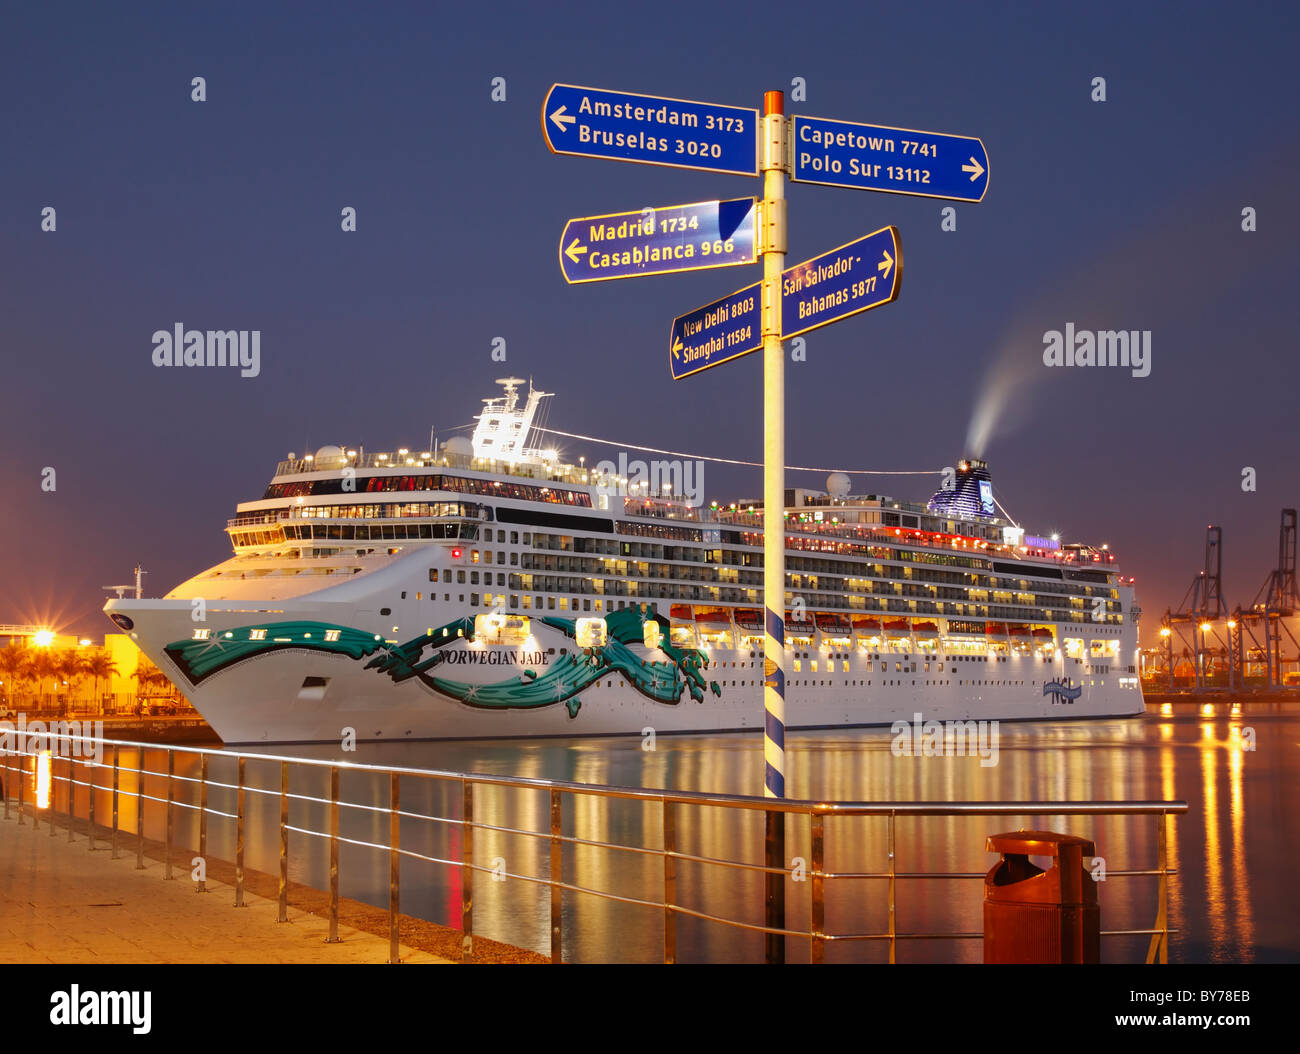 Cruise ship Norwegian Jade in Las Palmas on Gran Canaria, Canary Islands, Spain Stock Photo